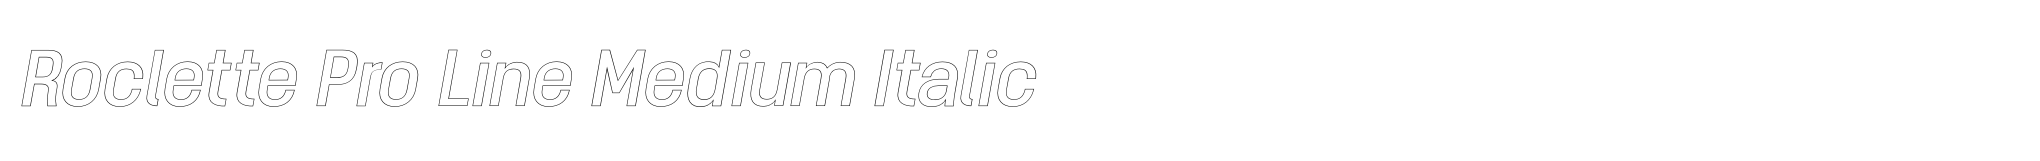 Roclette Pro Line Medium Italic image